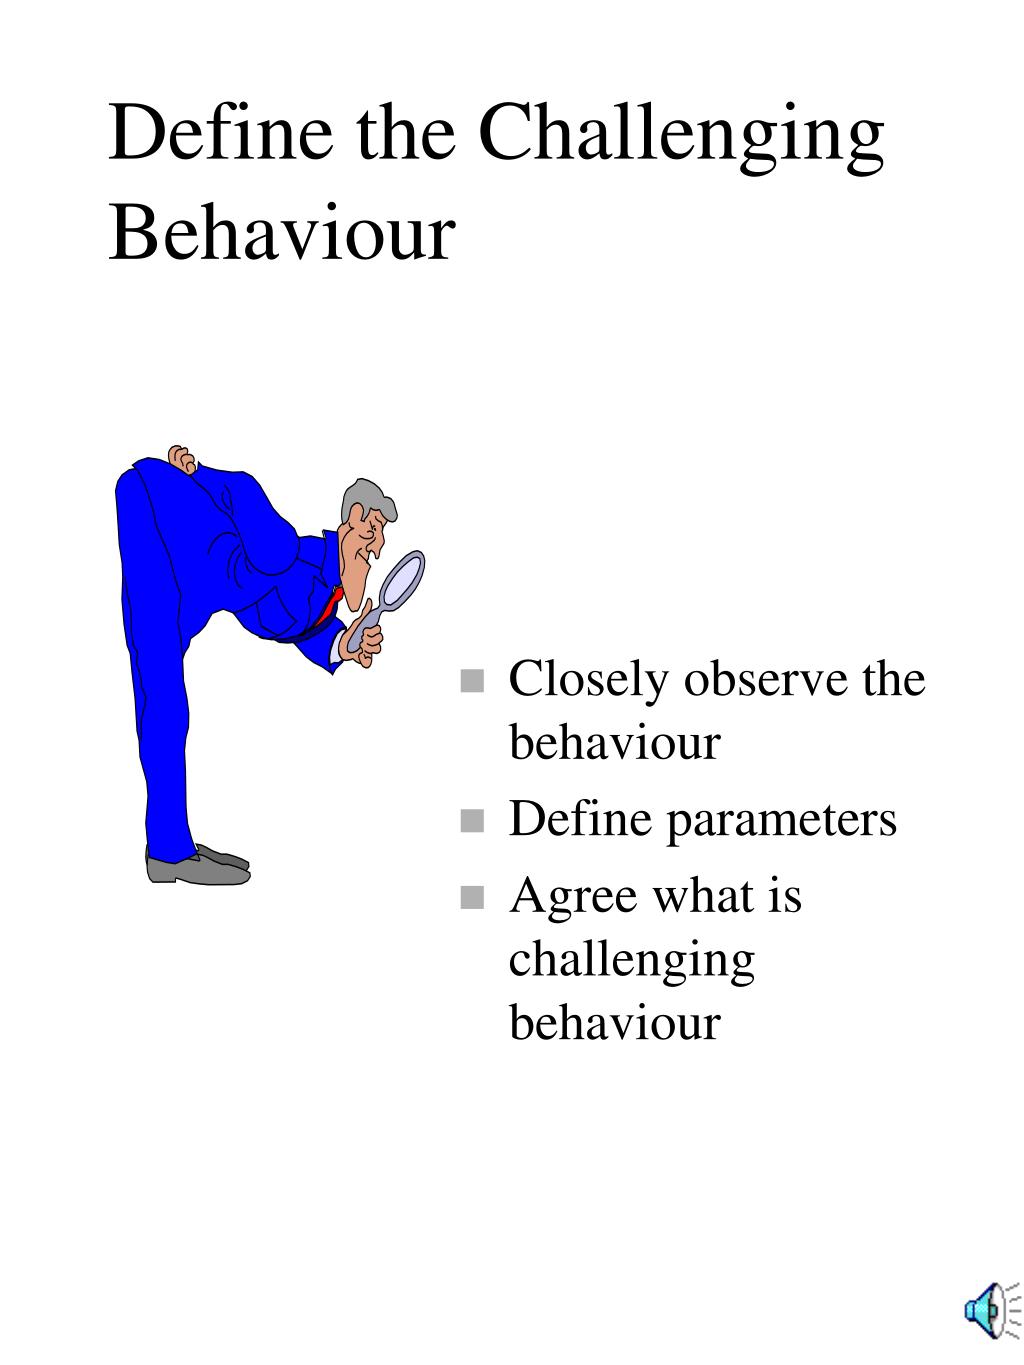 case study of challenging behaviour